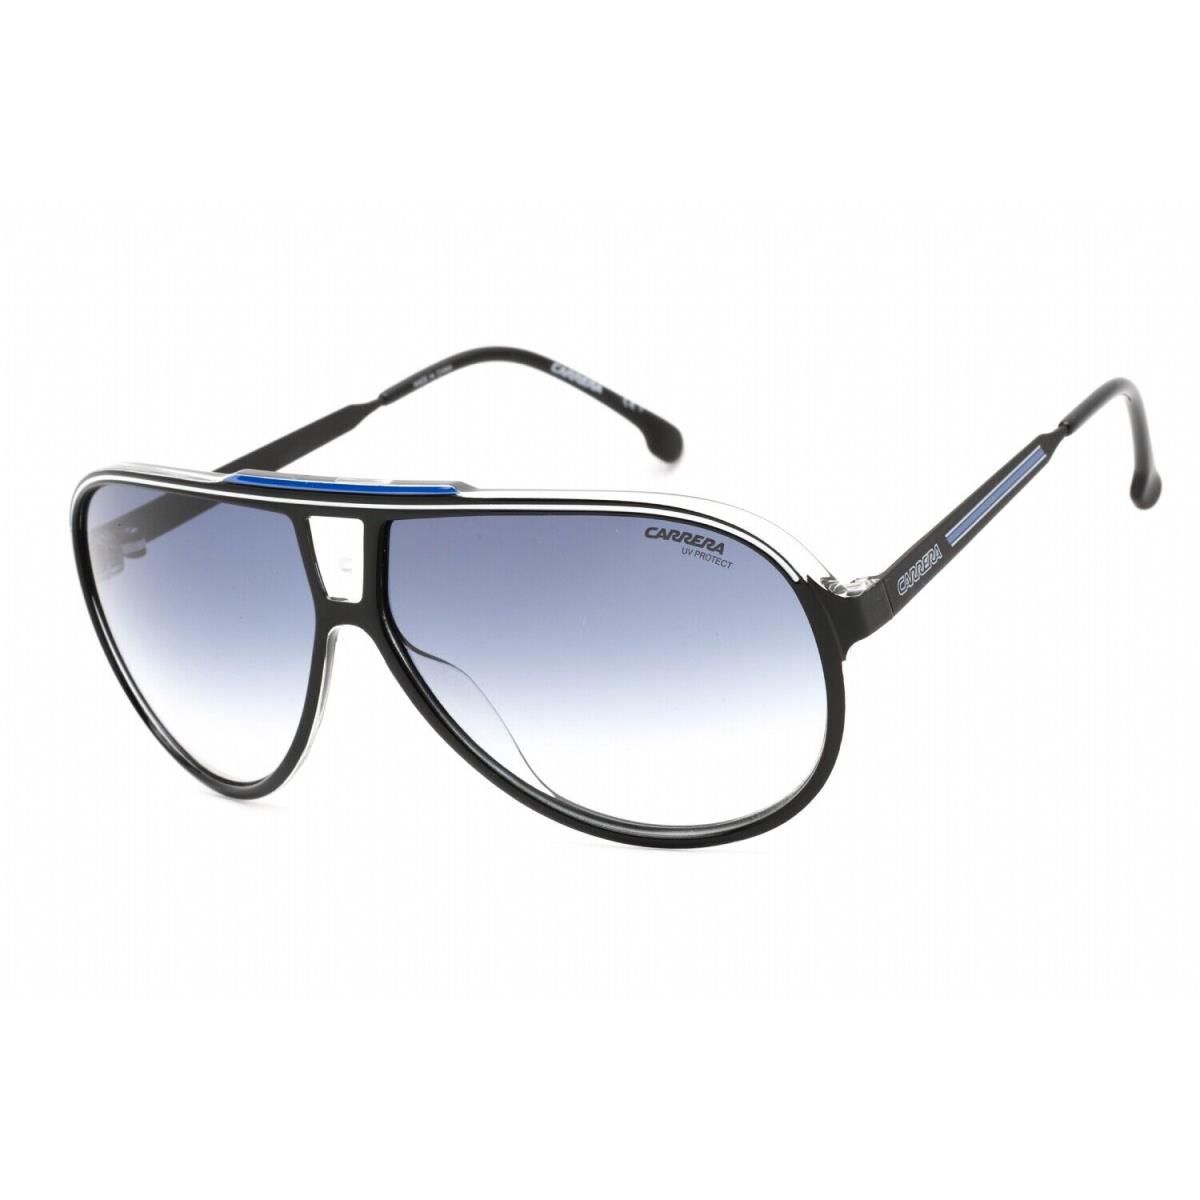 Carrera 1050S 0D51 08 Sunglasses Black Blue Frame Blue Shaded Lens 63mm